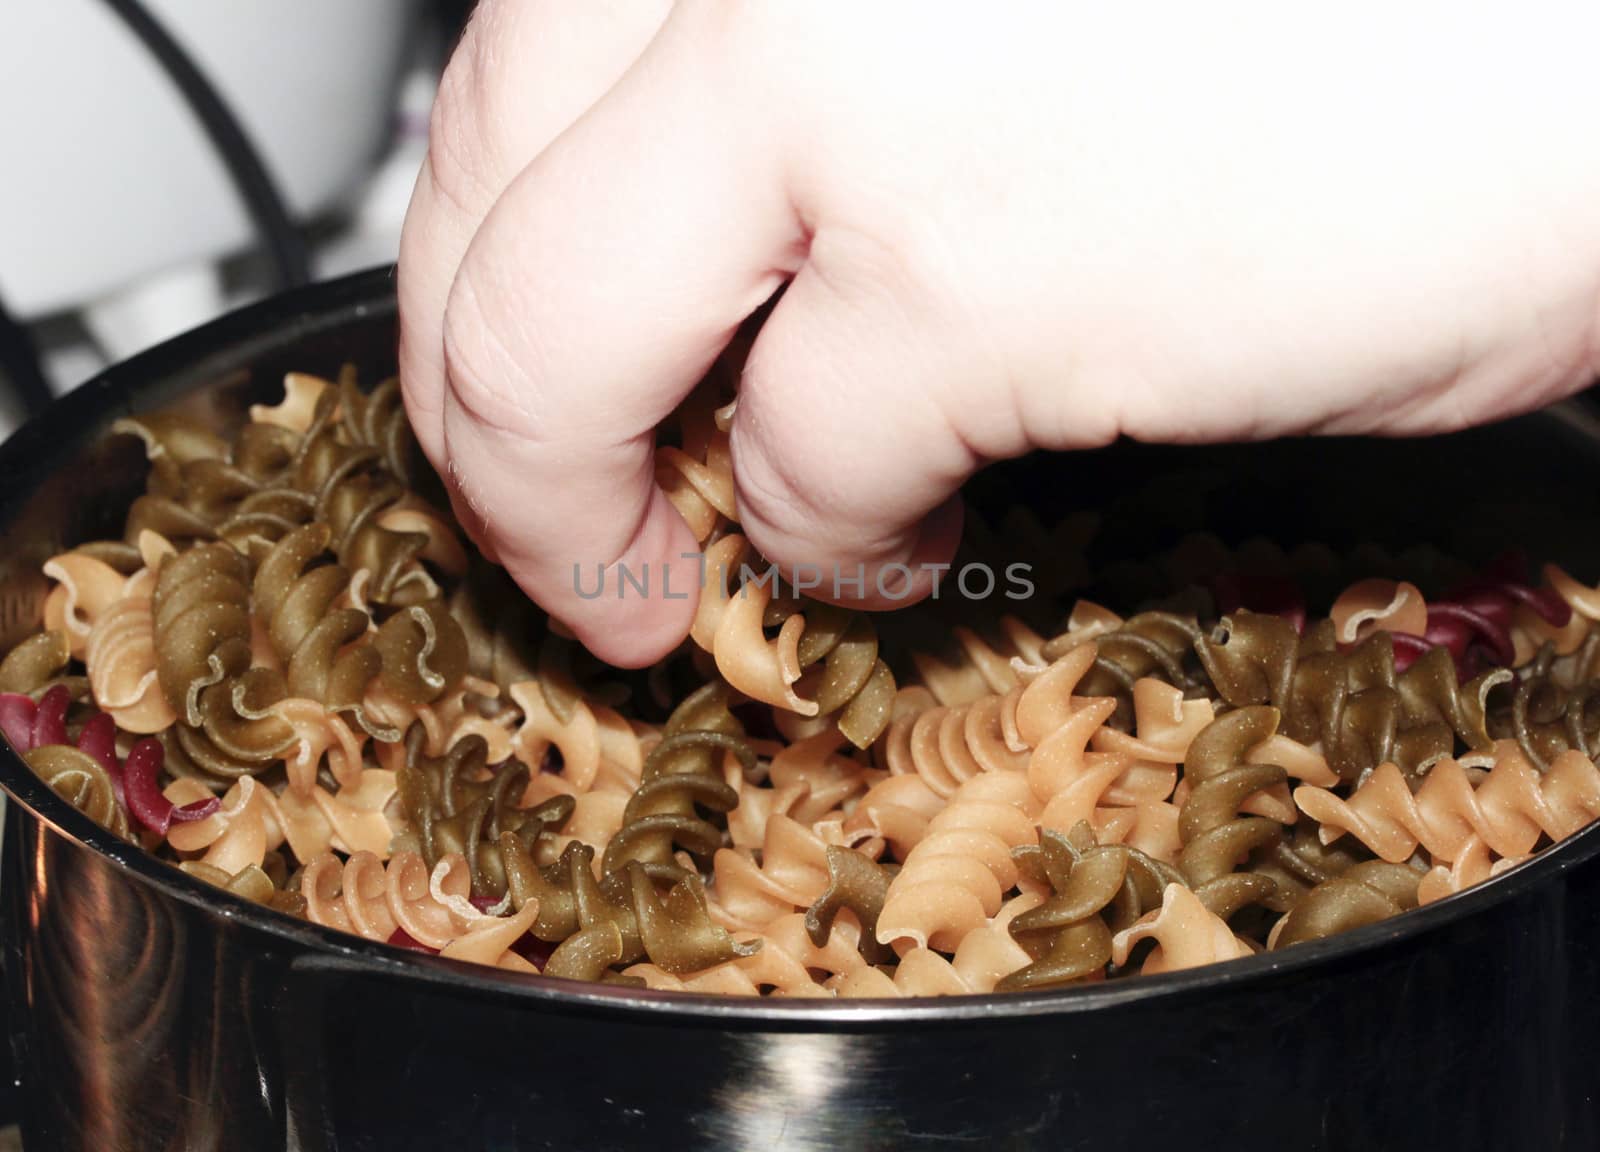 Spiral pasta in a pot